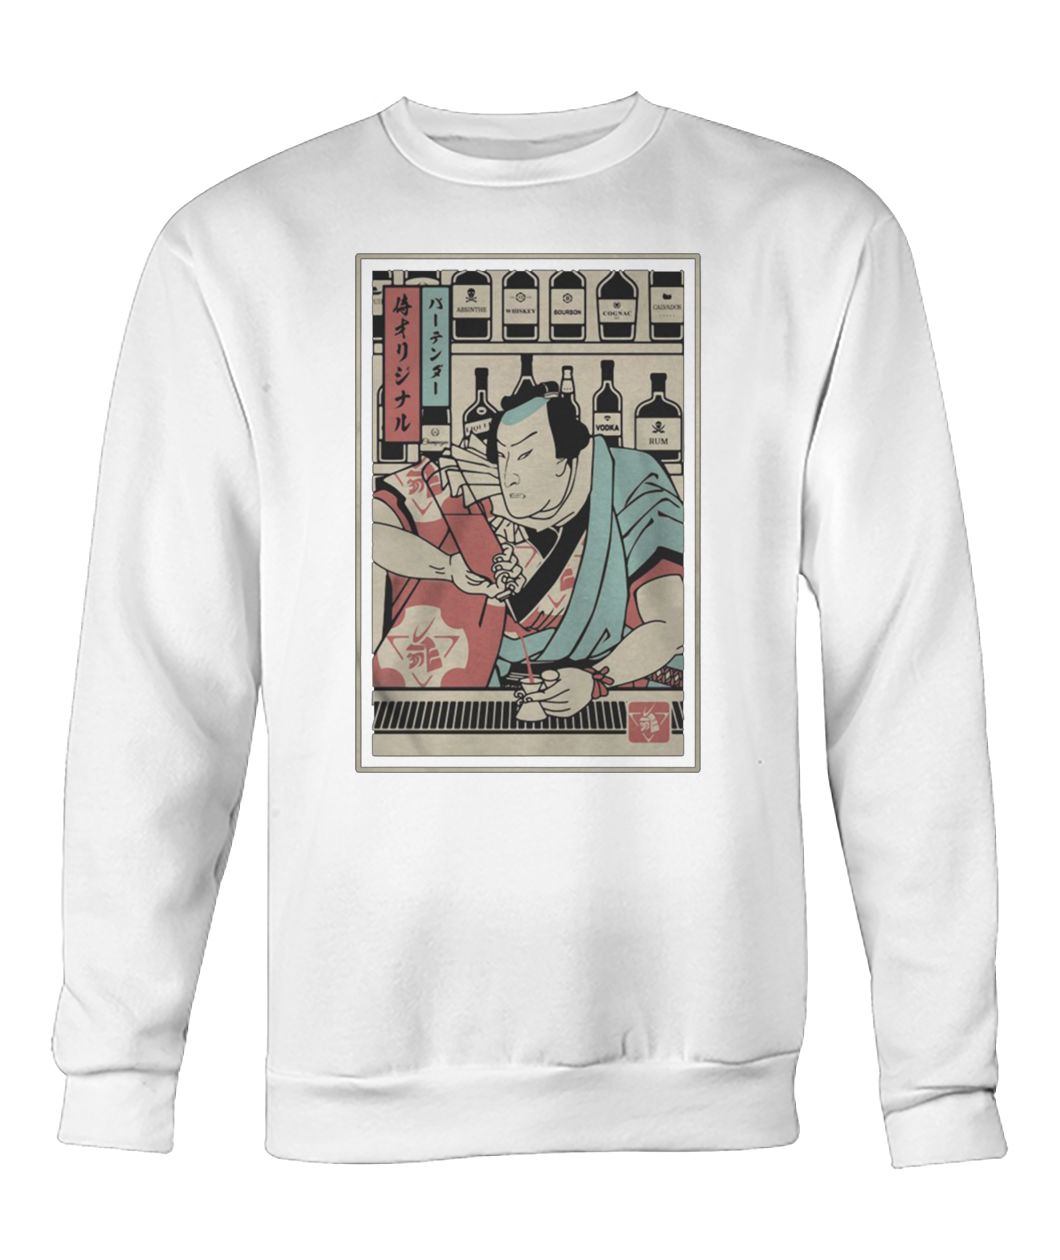 Bartender samurai crew neck sweatshirt